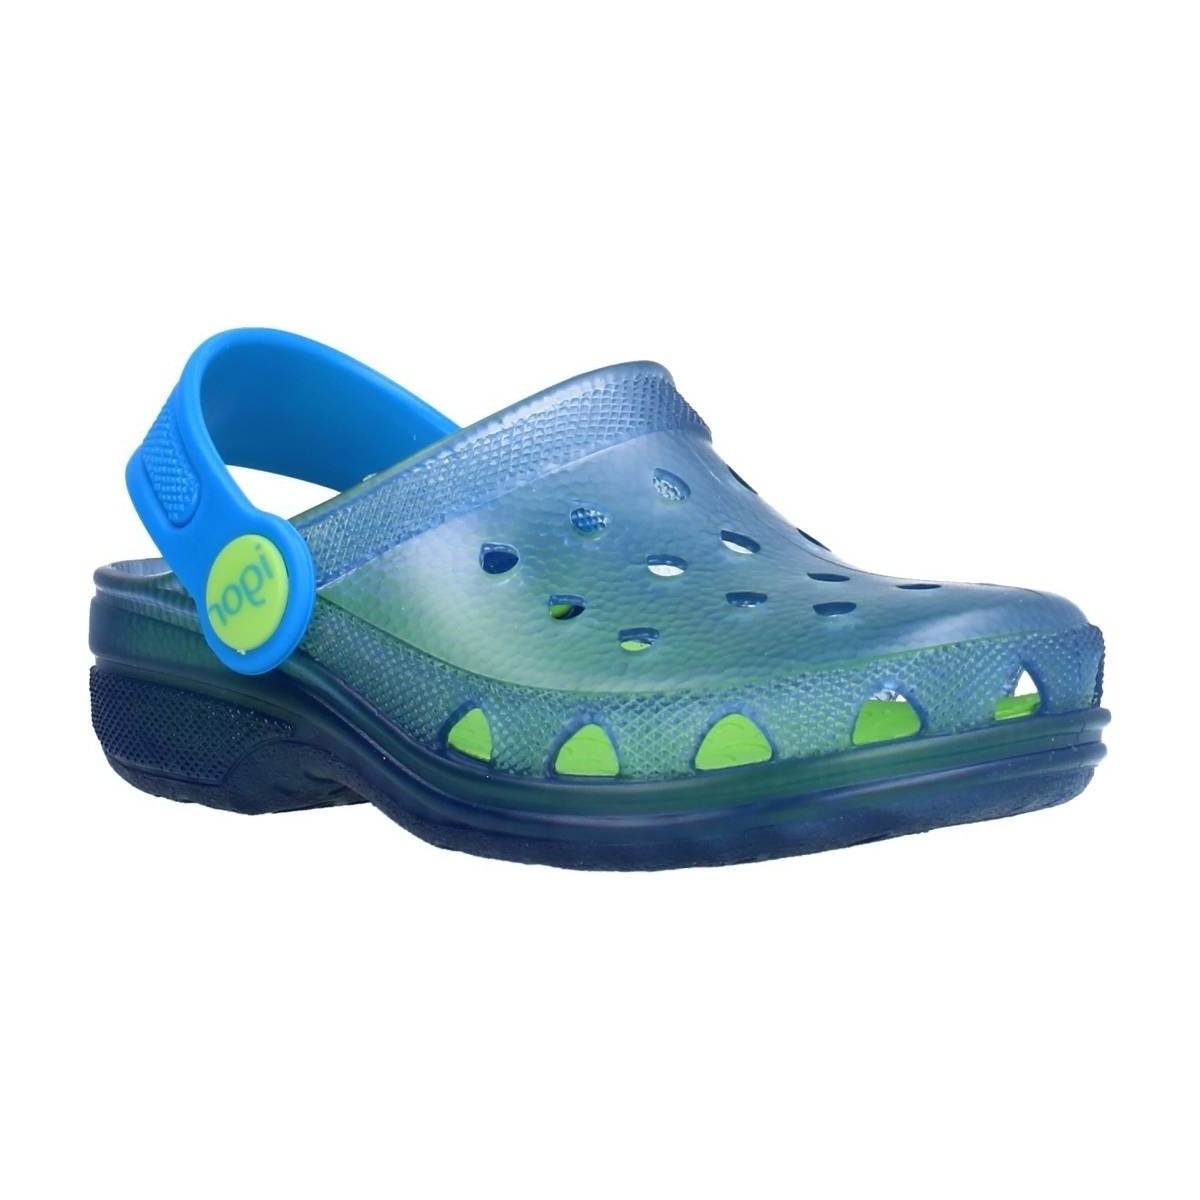 Chaussures Fille Tongs IGOR S10116 Bleu